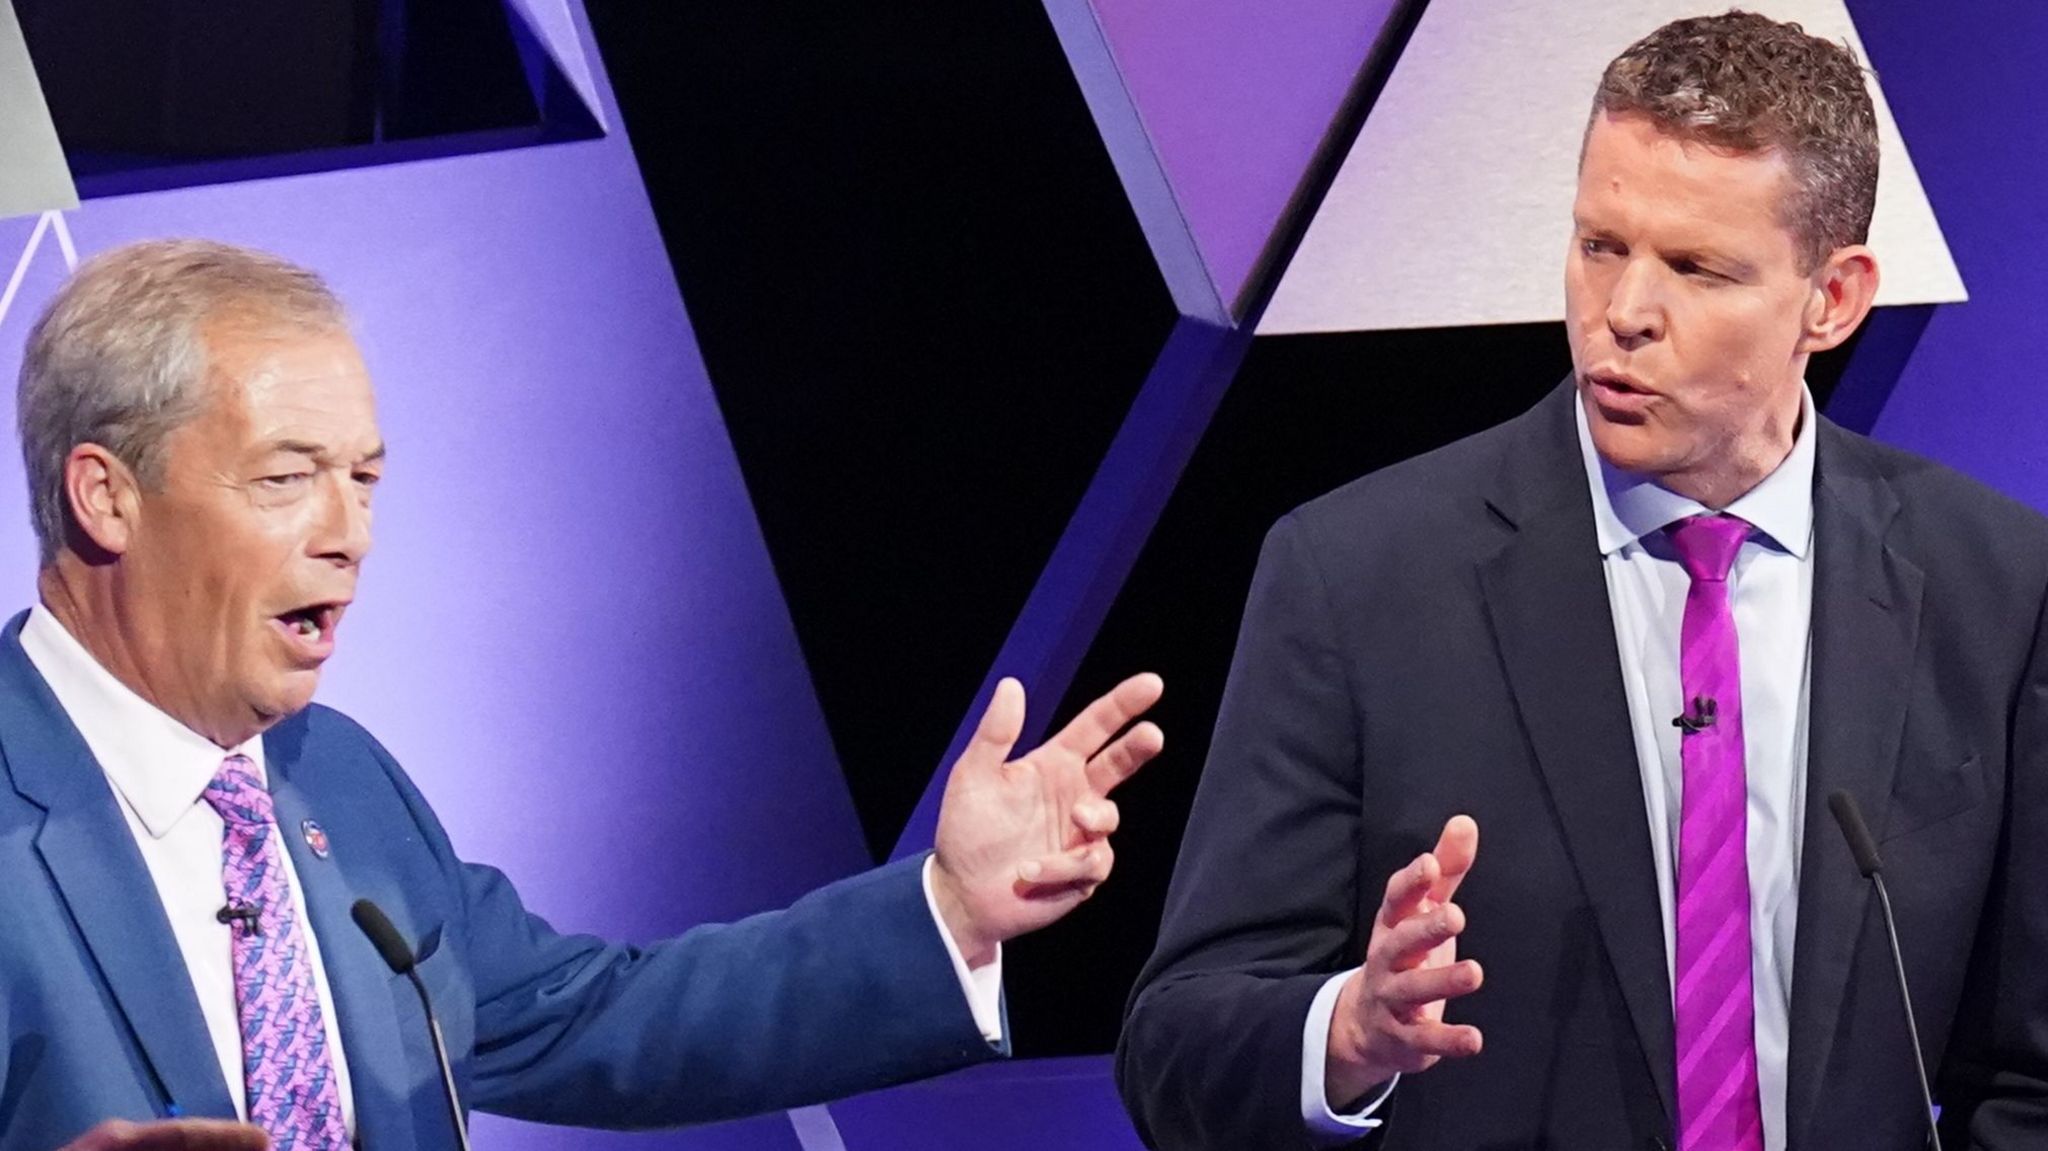 Nigel Farage and Rhun ap Iorwerth at a televised general election debate